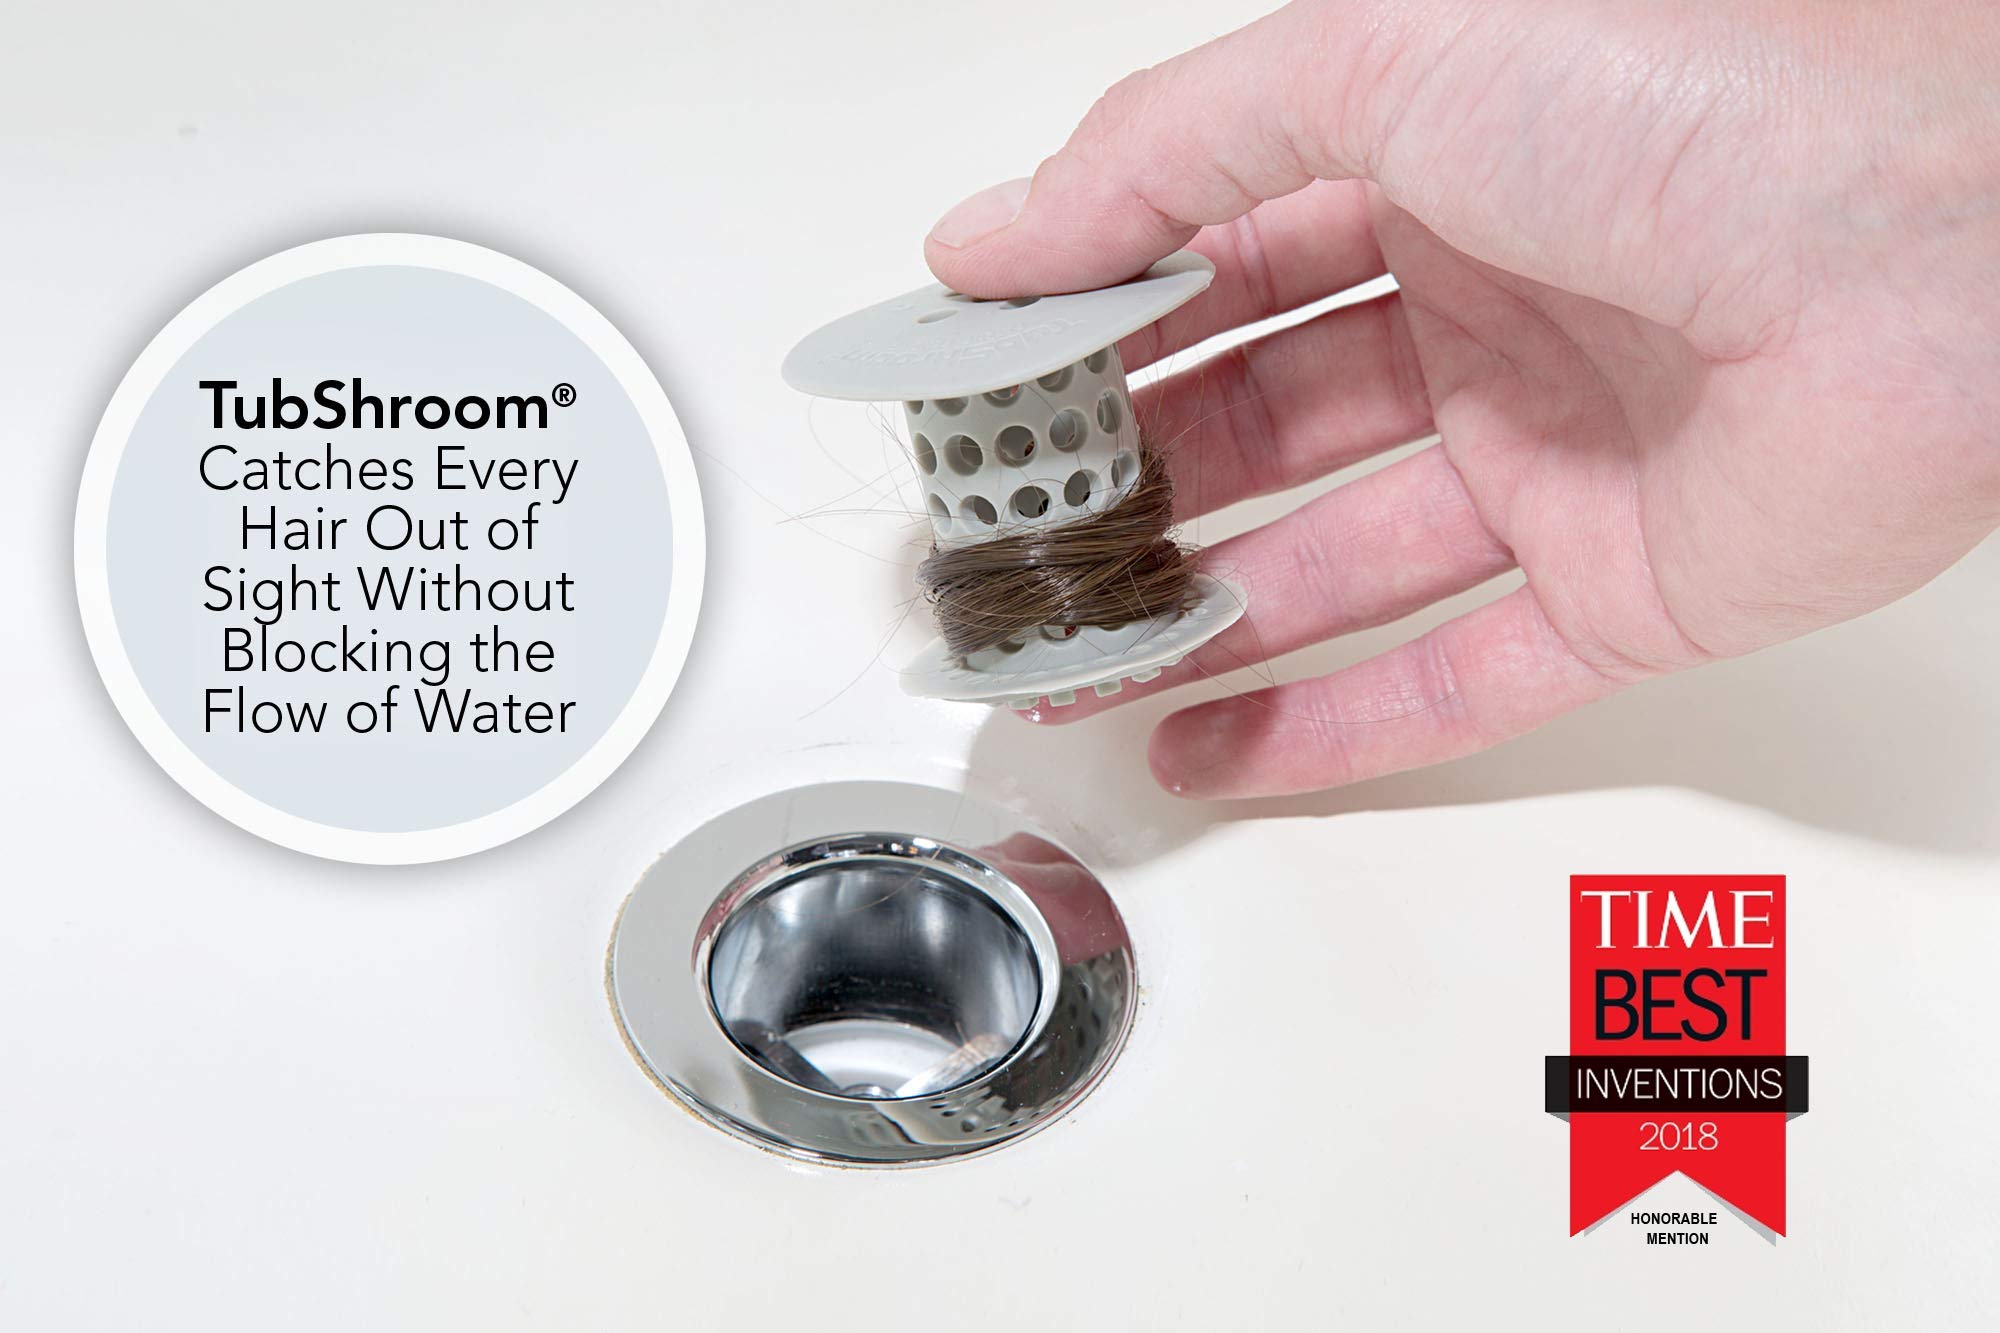 TubShroom and SinkShroom Drain Protectors Hair Catchers for Bathtubs and Sinks, Gray